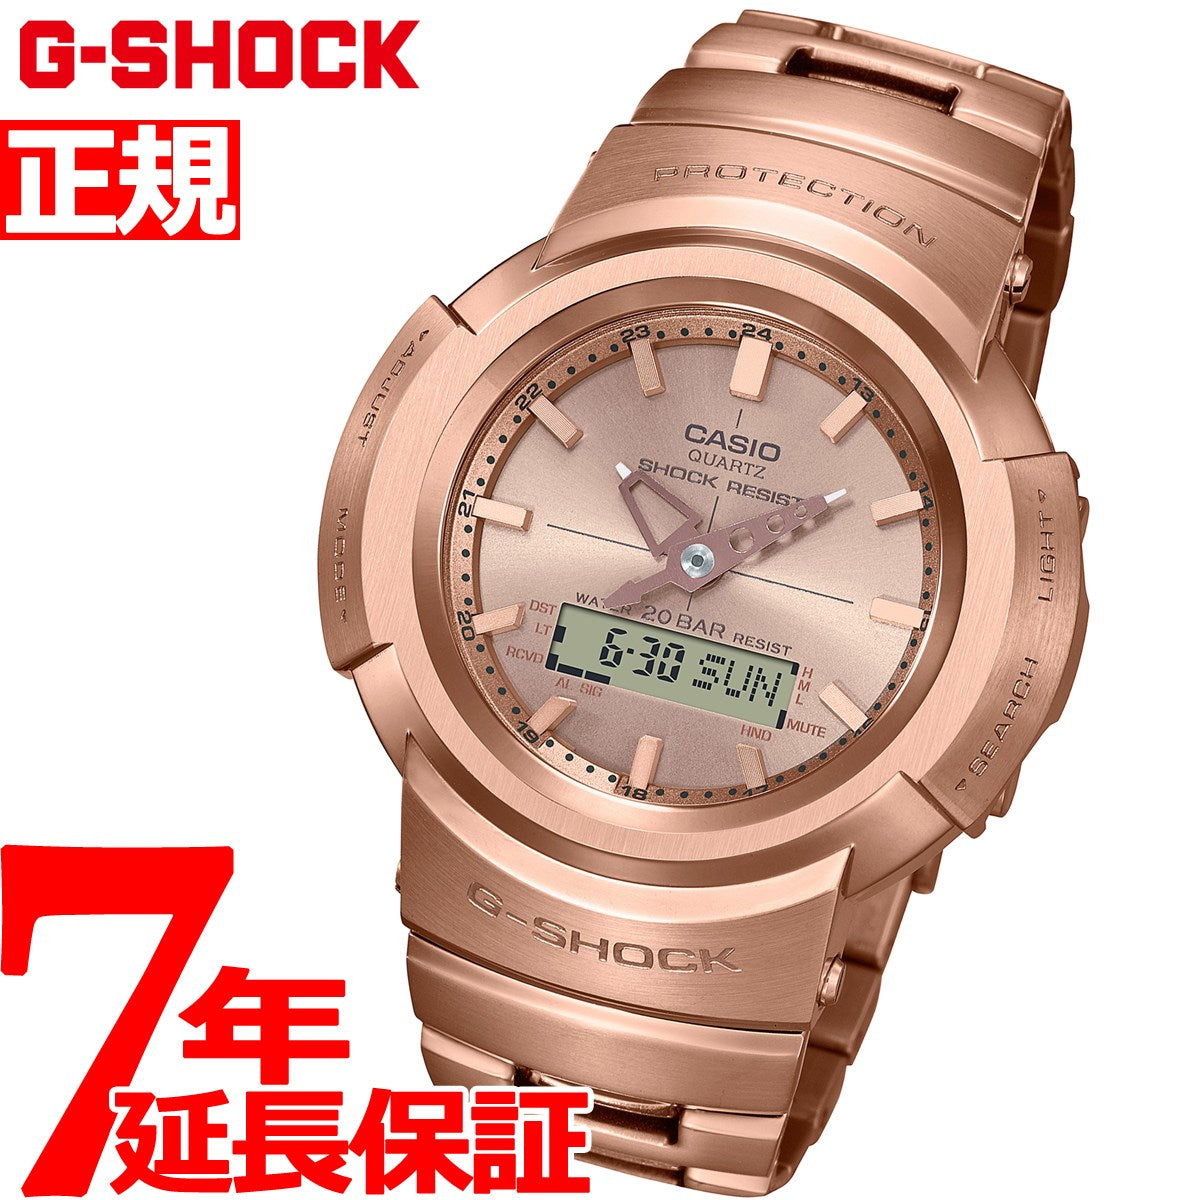 G-SHOCK 電波 ソーラー 電波時計 カシオ Gショック 腕時計 メンズ AWM-500GD-4AJF